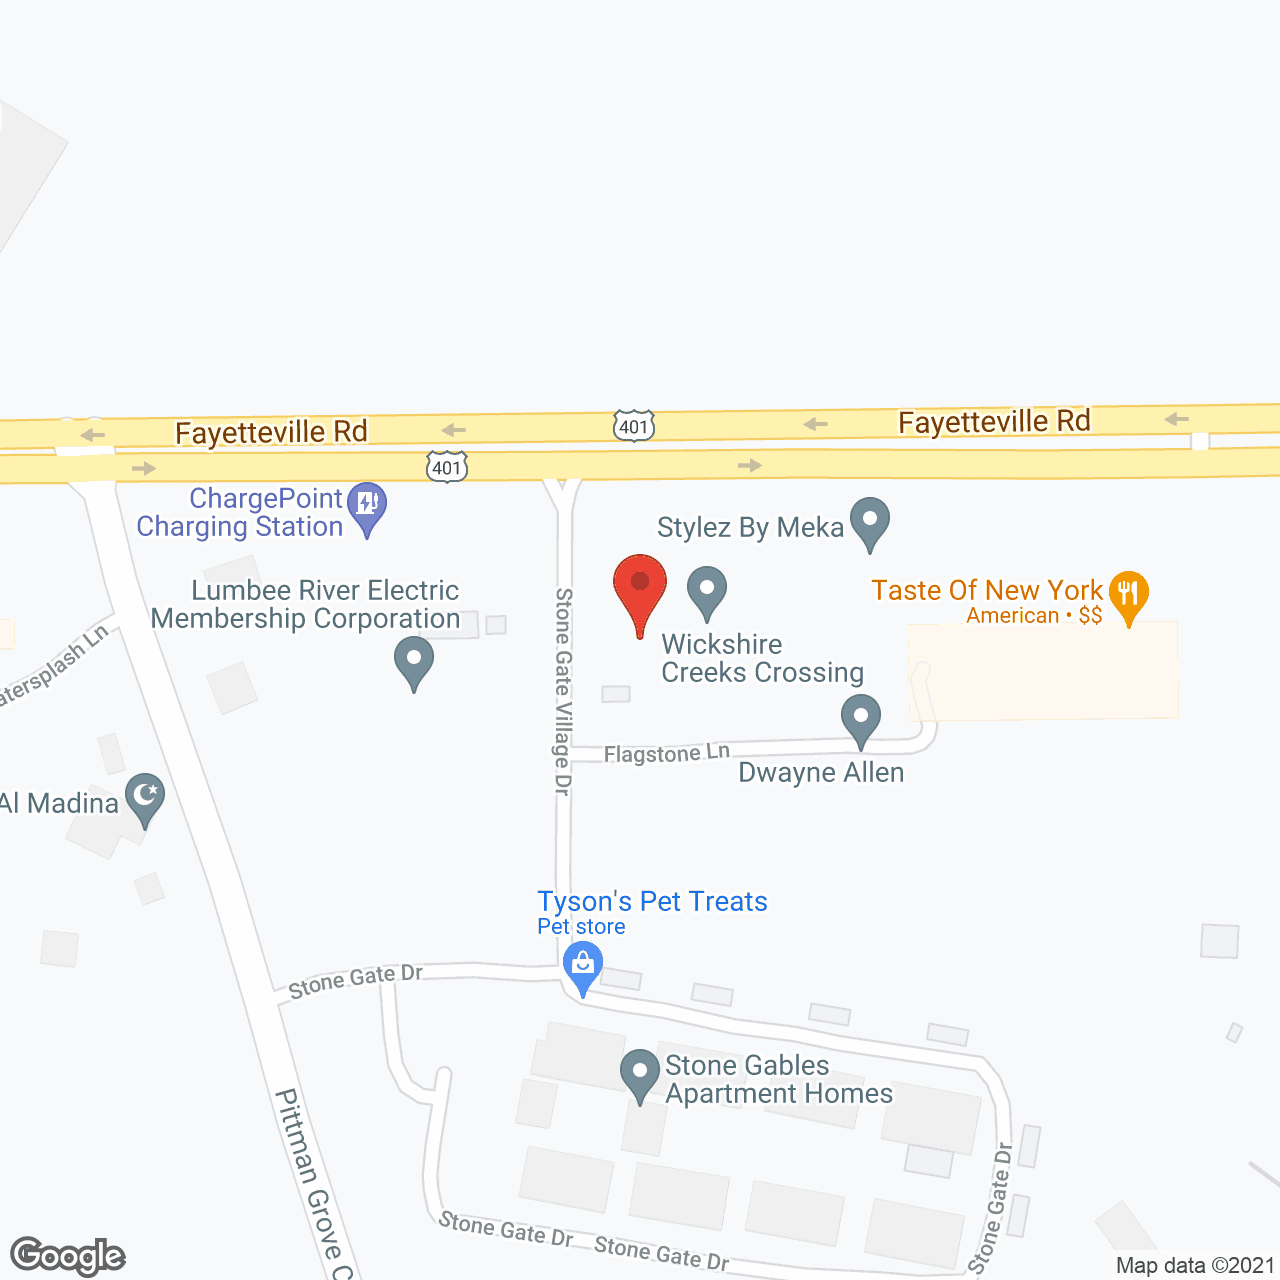 Wickshire Creeks Crossing in google map